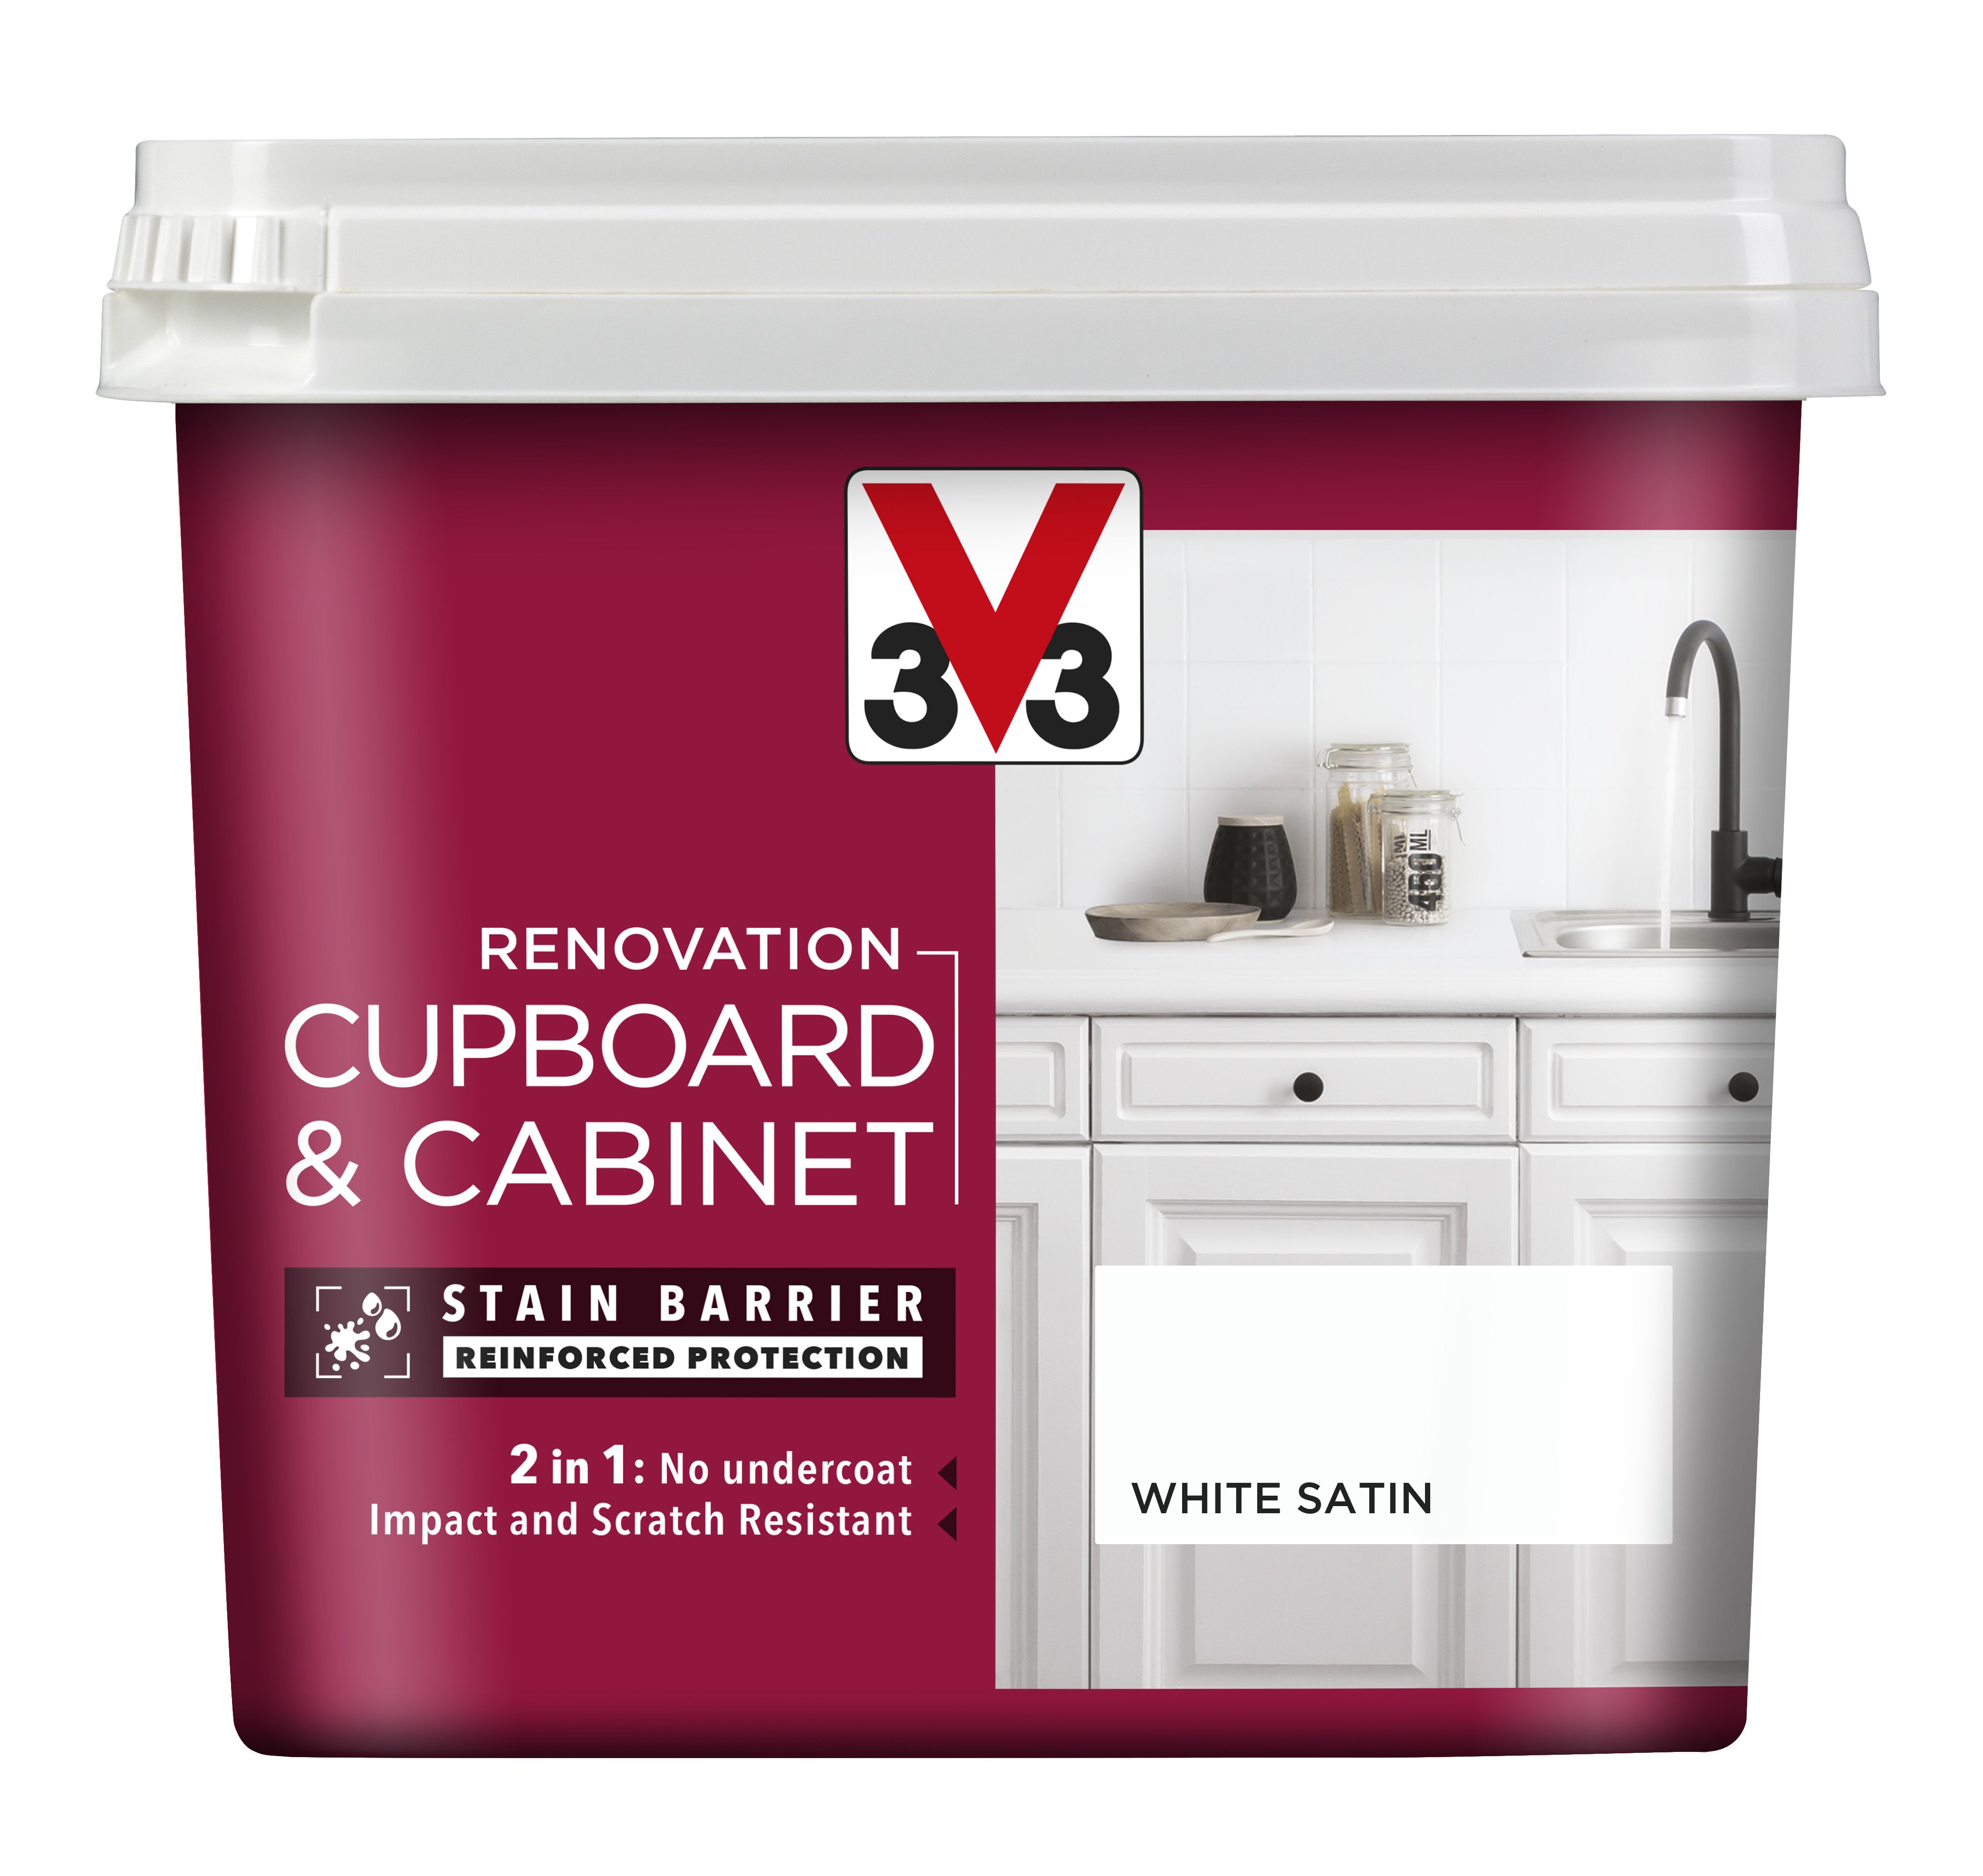 V33 Renovation White Satinwood Cupboard & cabinet paint, 750ml